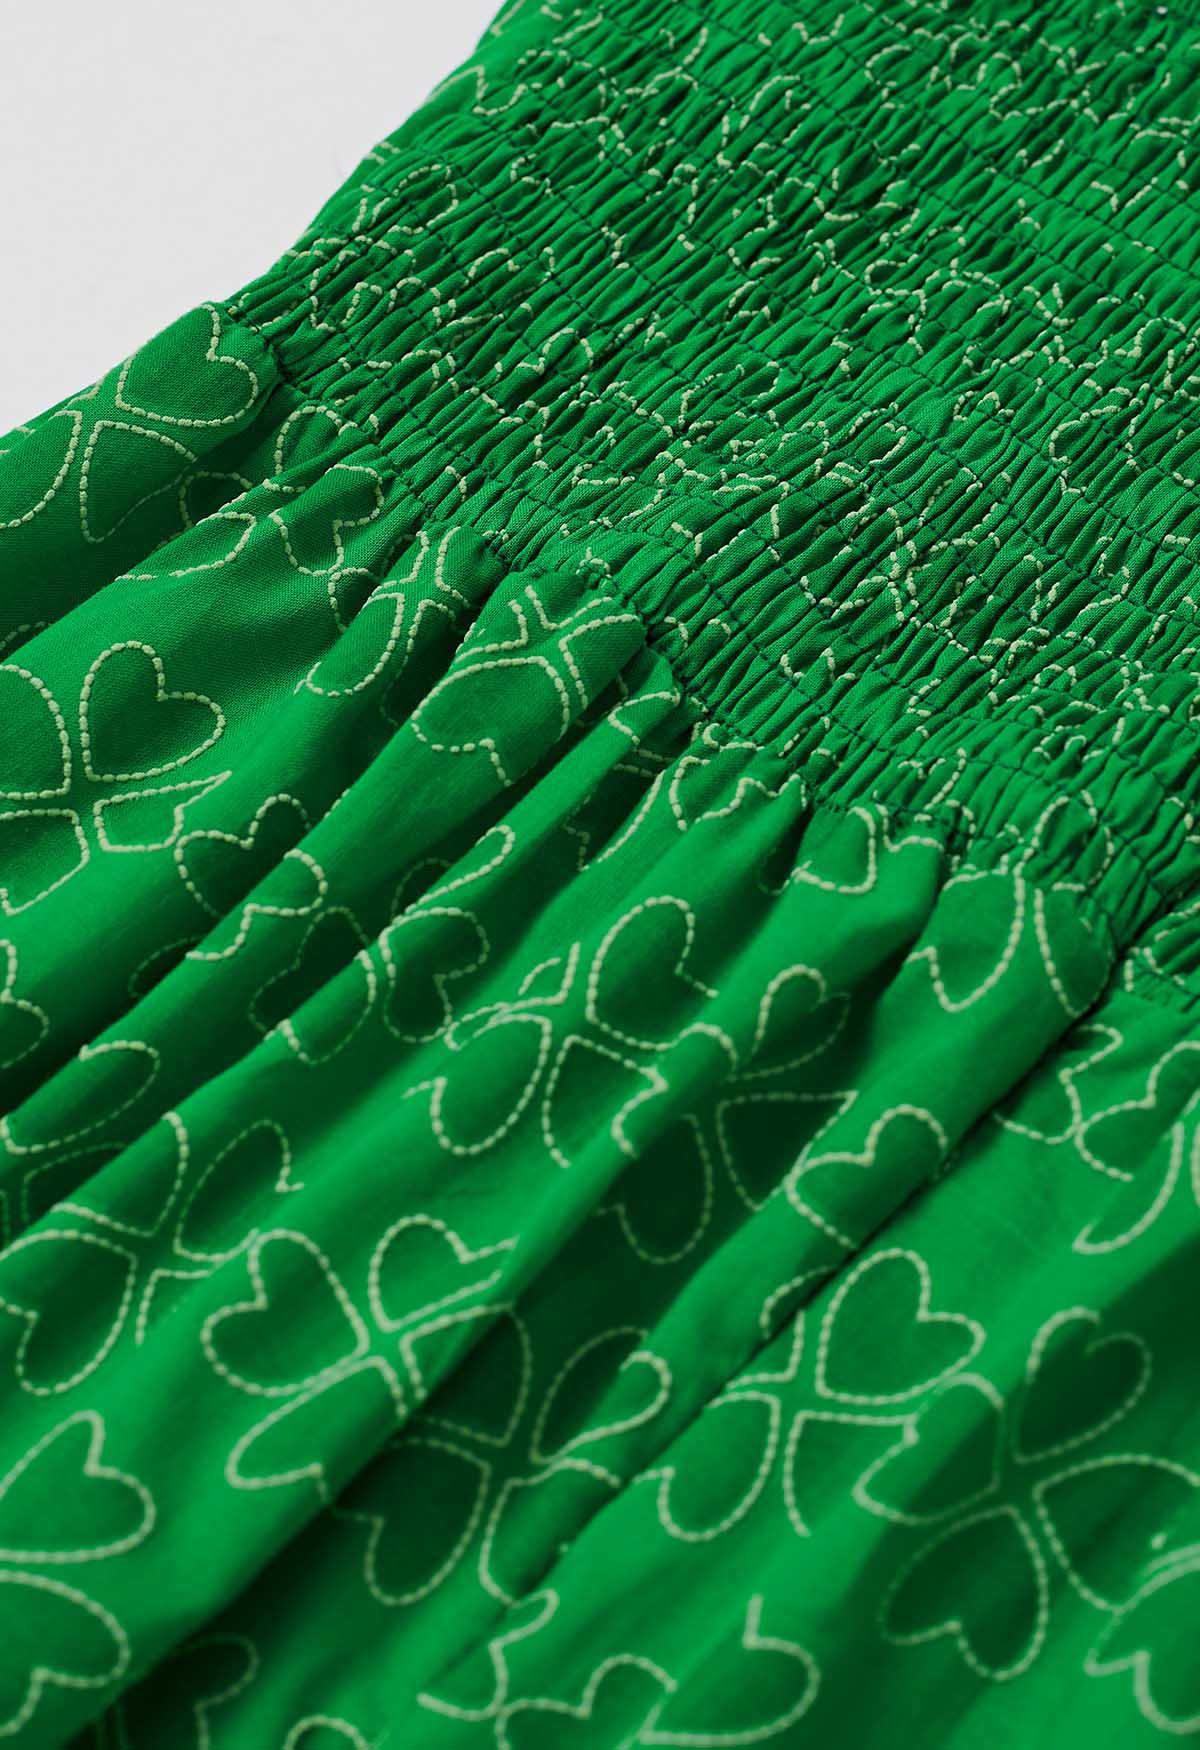 Four-Leaf Clover Tie-Strap Maxi Dress